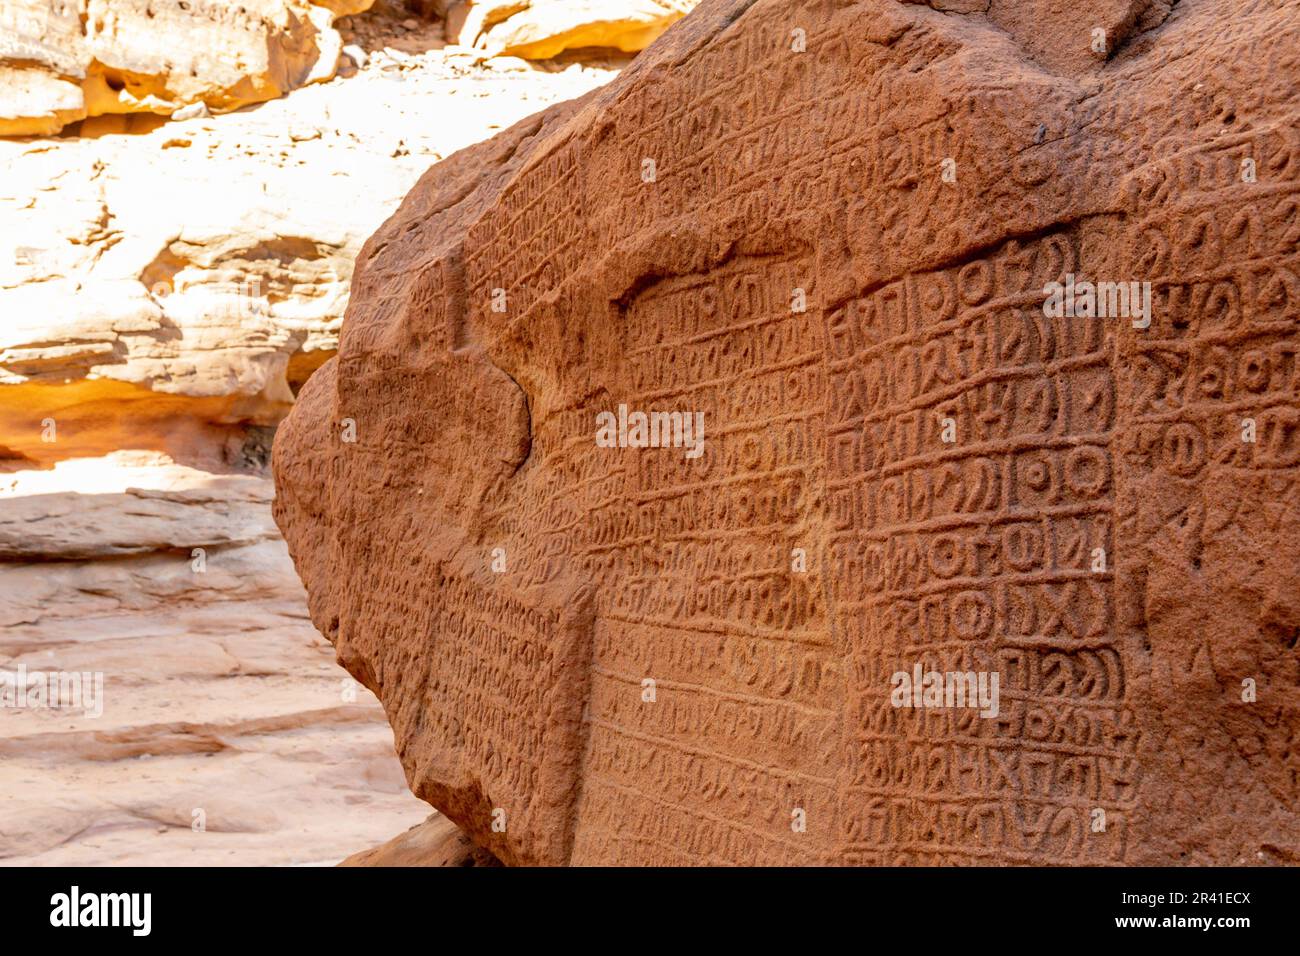 Ancient stone writings, Jabal Ikmah, Al Ula, Saudi Arabia Stock Photo